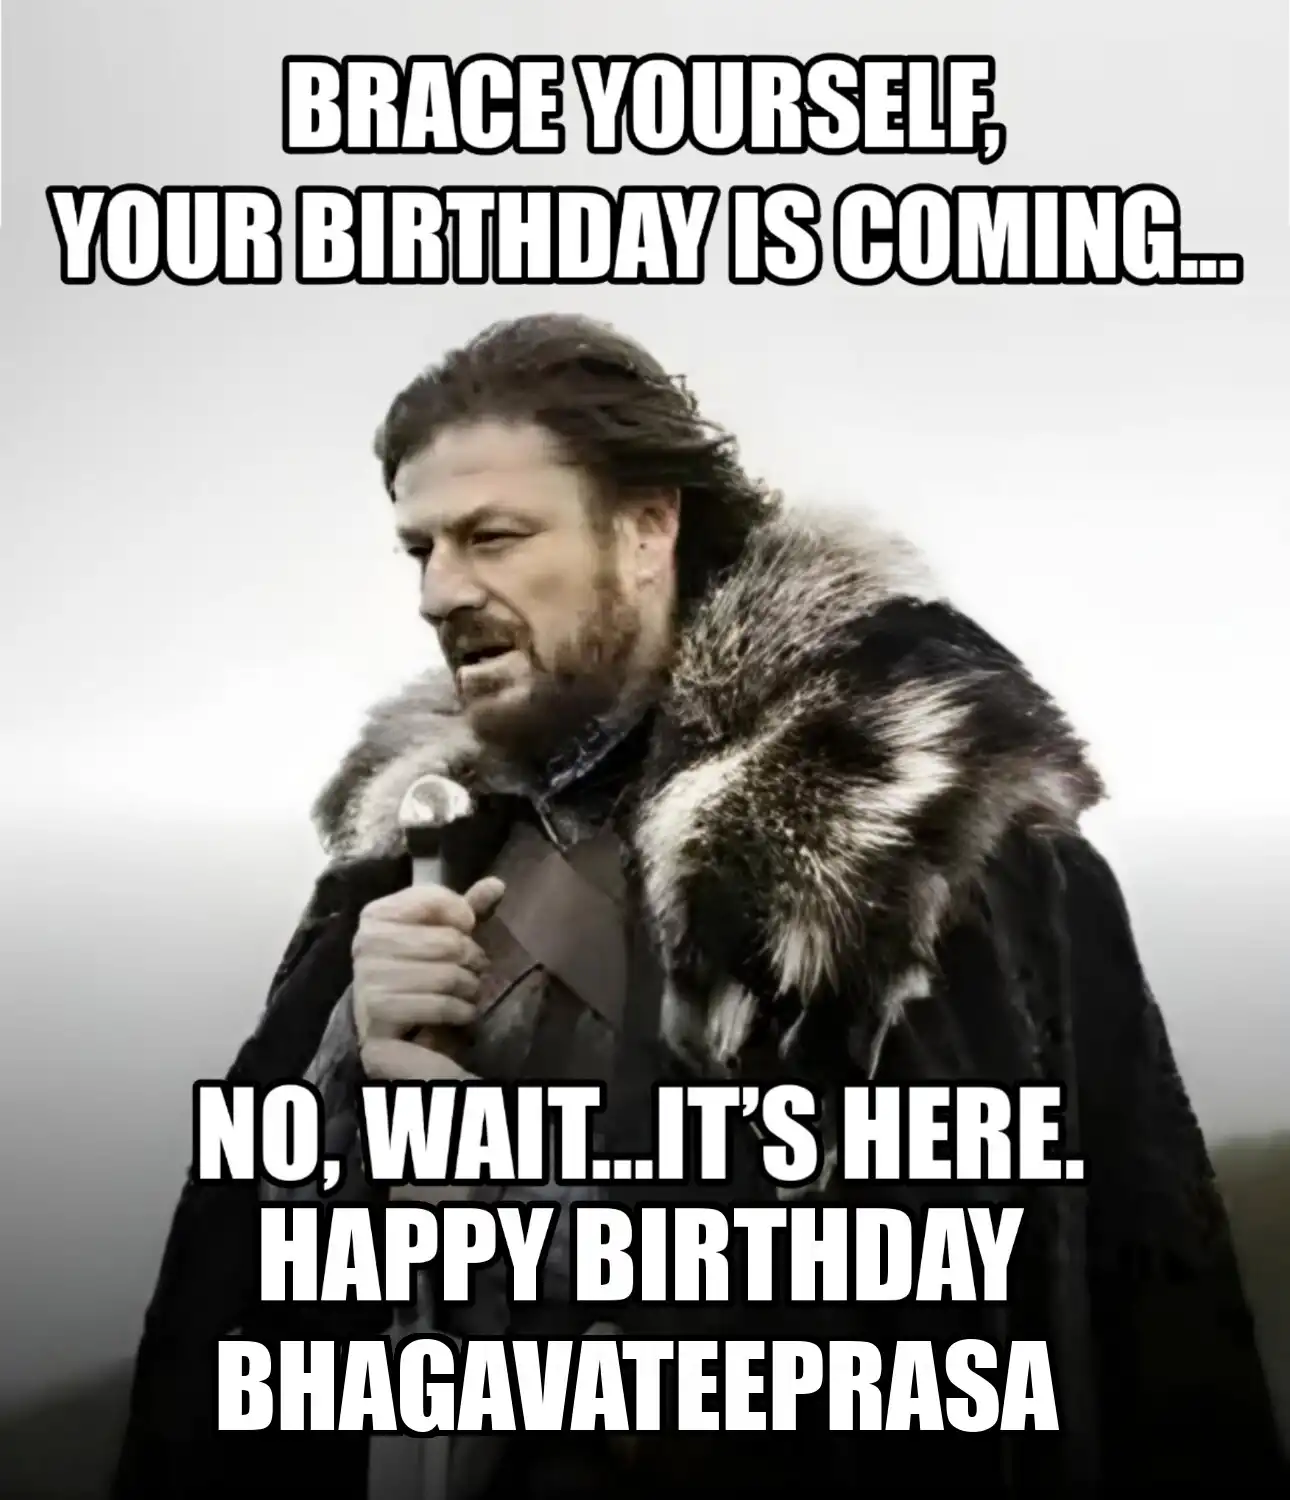 Happy Birthday Bhagavateeprasa Brace Yourself Your Birthday Is Coming Meme